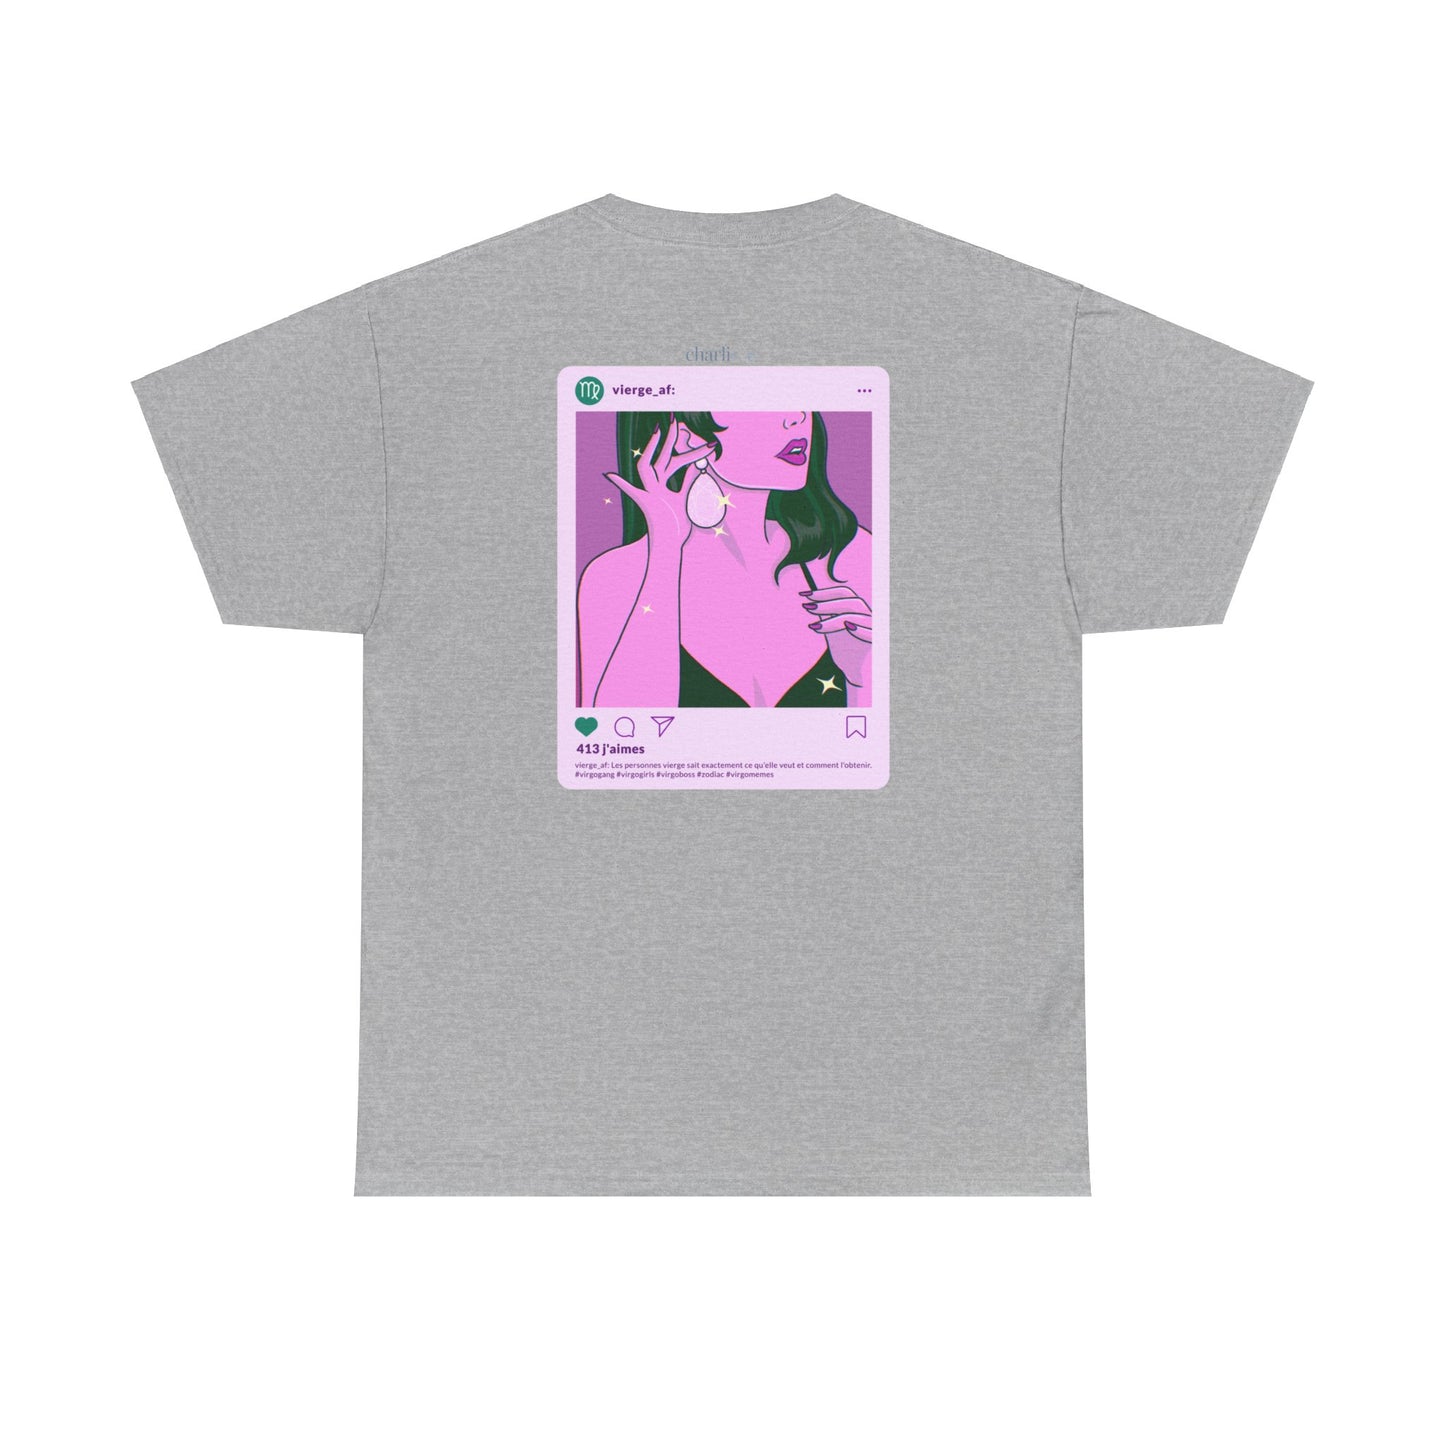 Printable t-shirt - BLANK - for adults